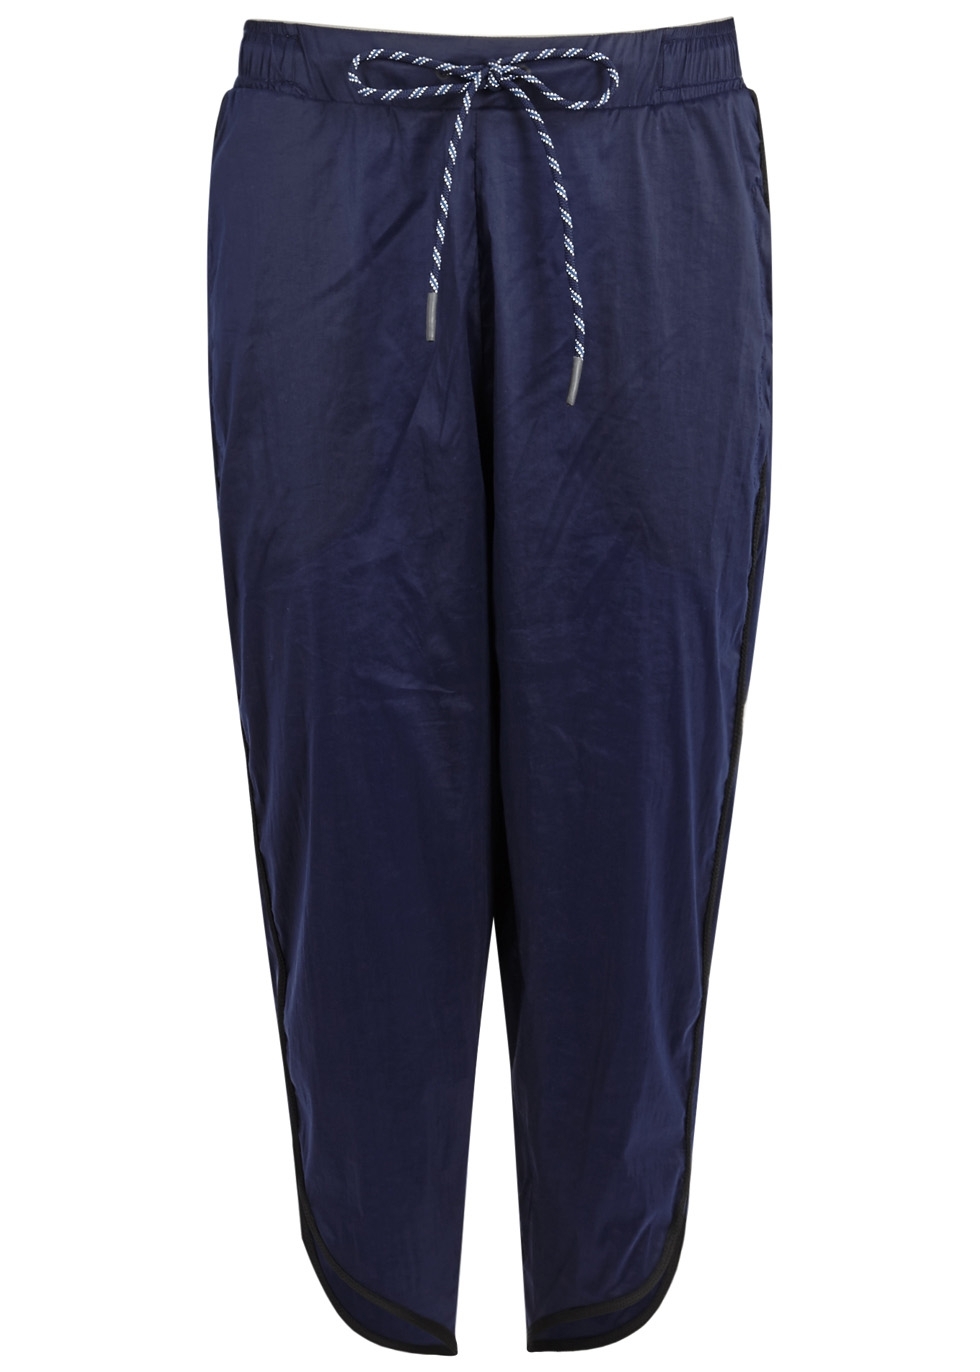 Luna dark blue shell jogging trousers